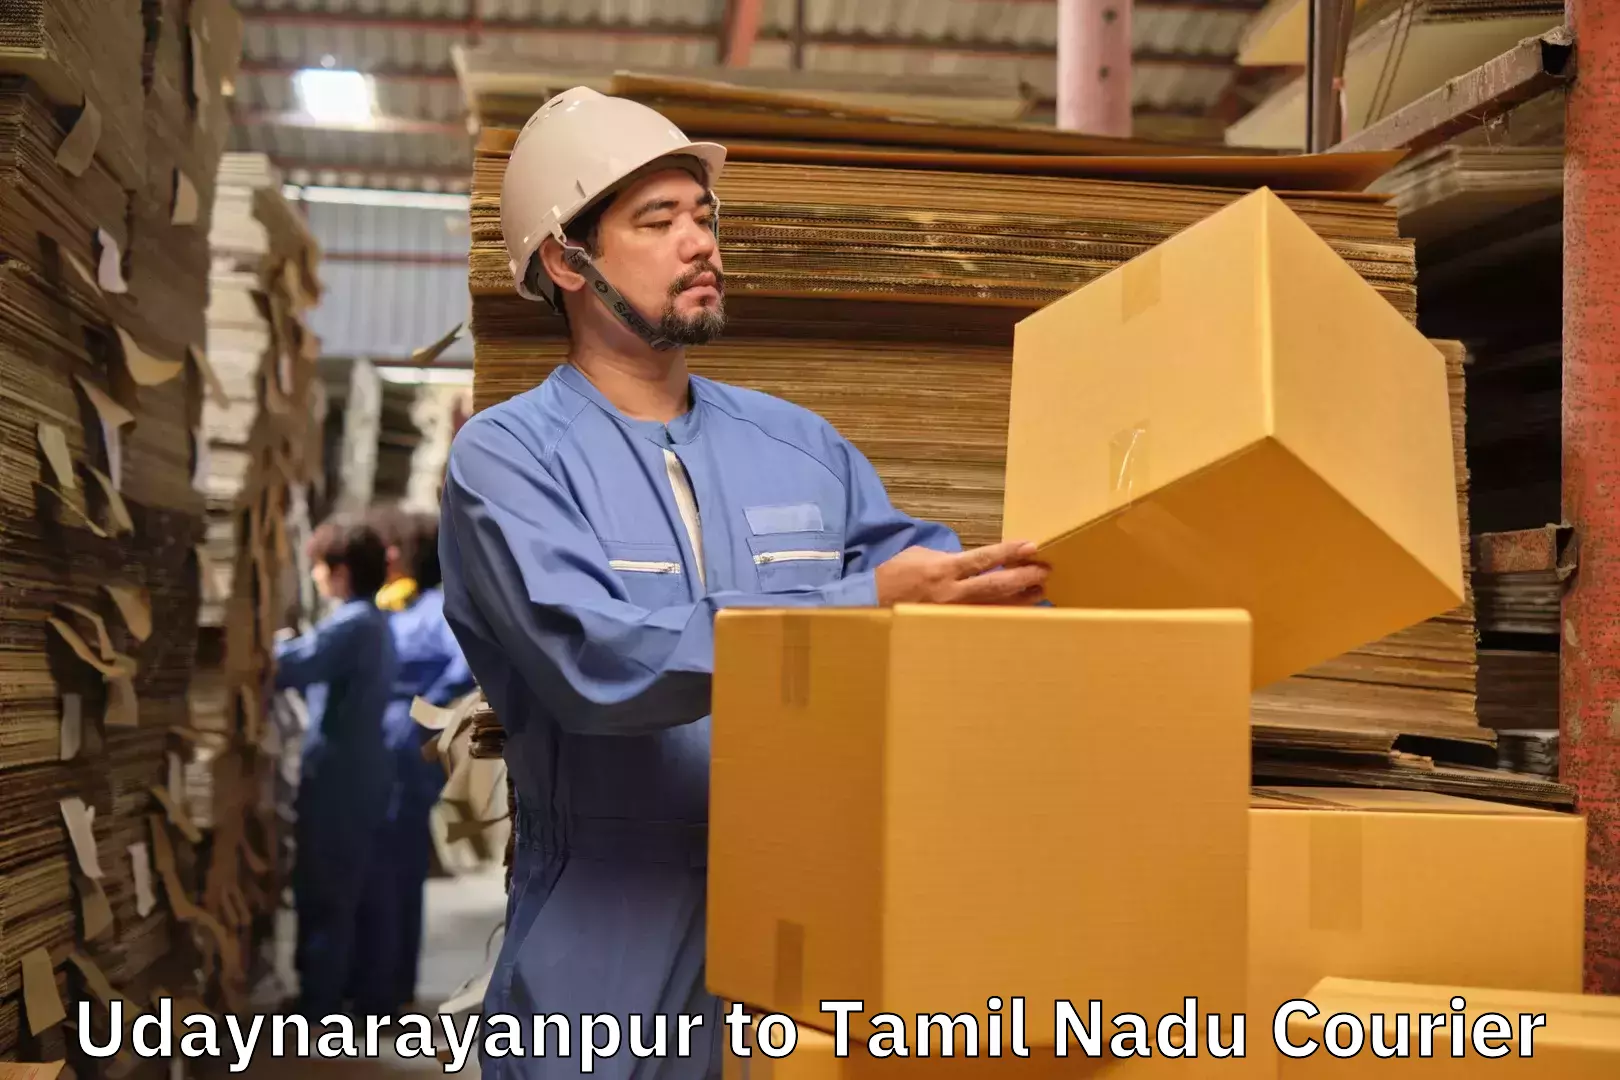 Luggage delivery app Udaynarayanpur to Melmaruvathur